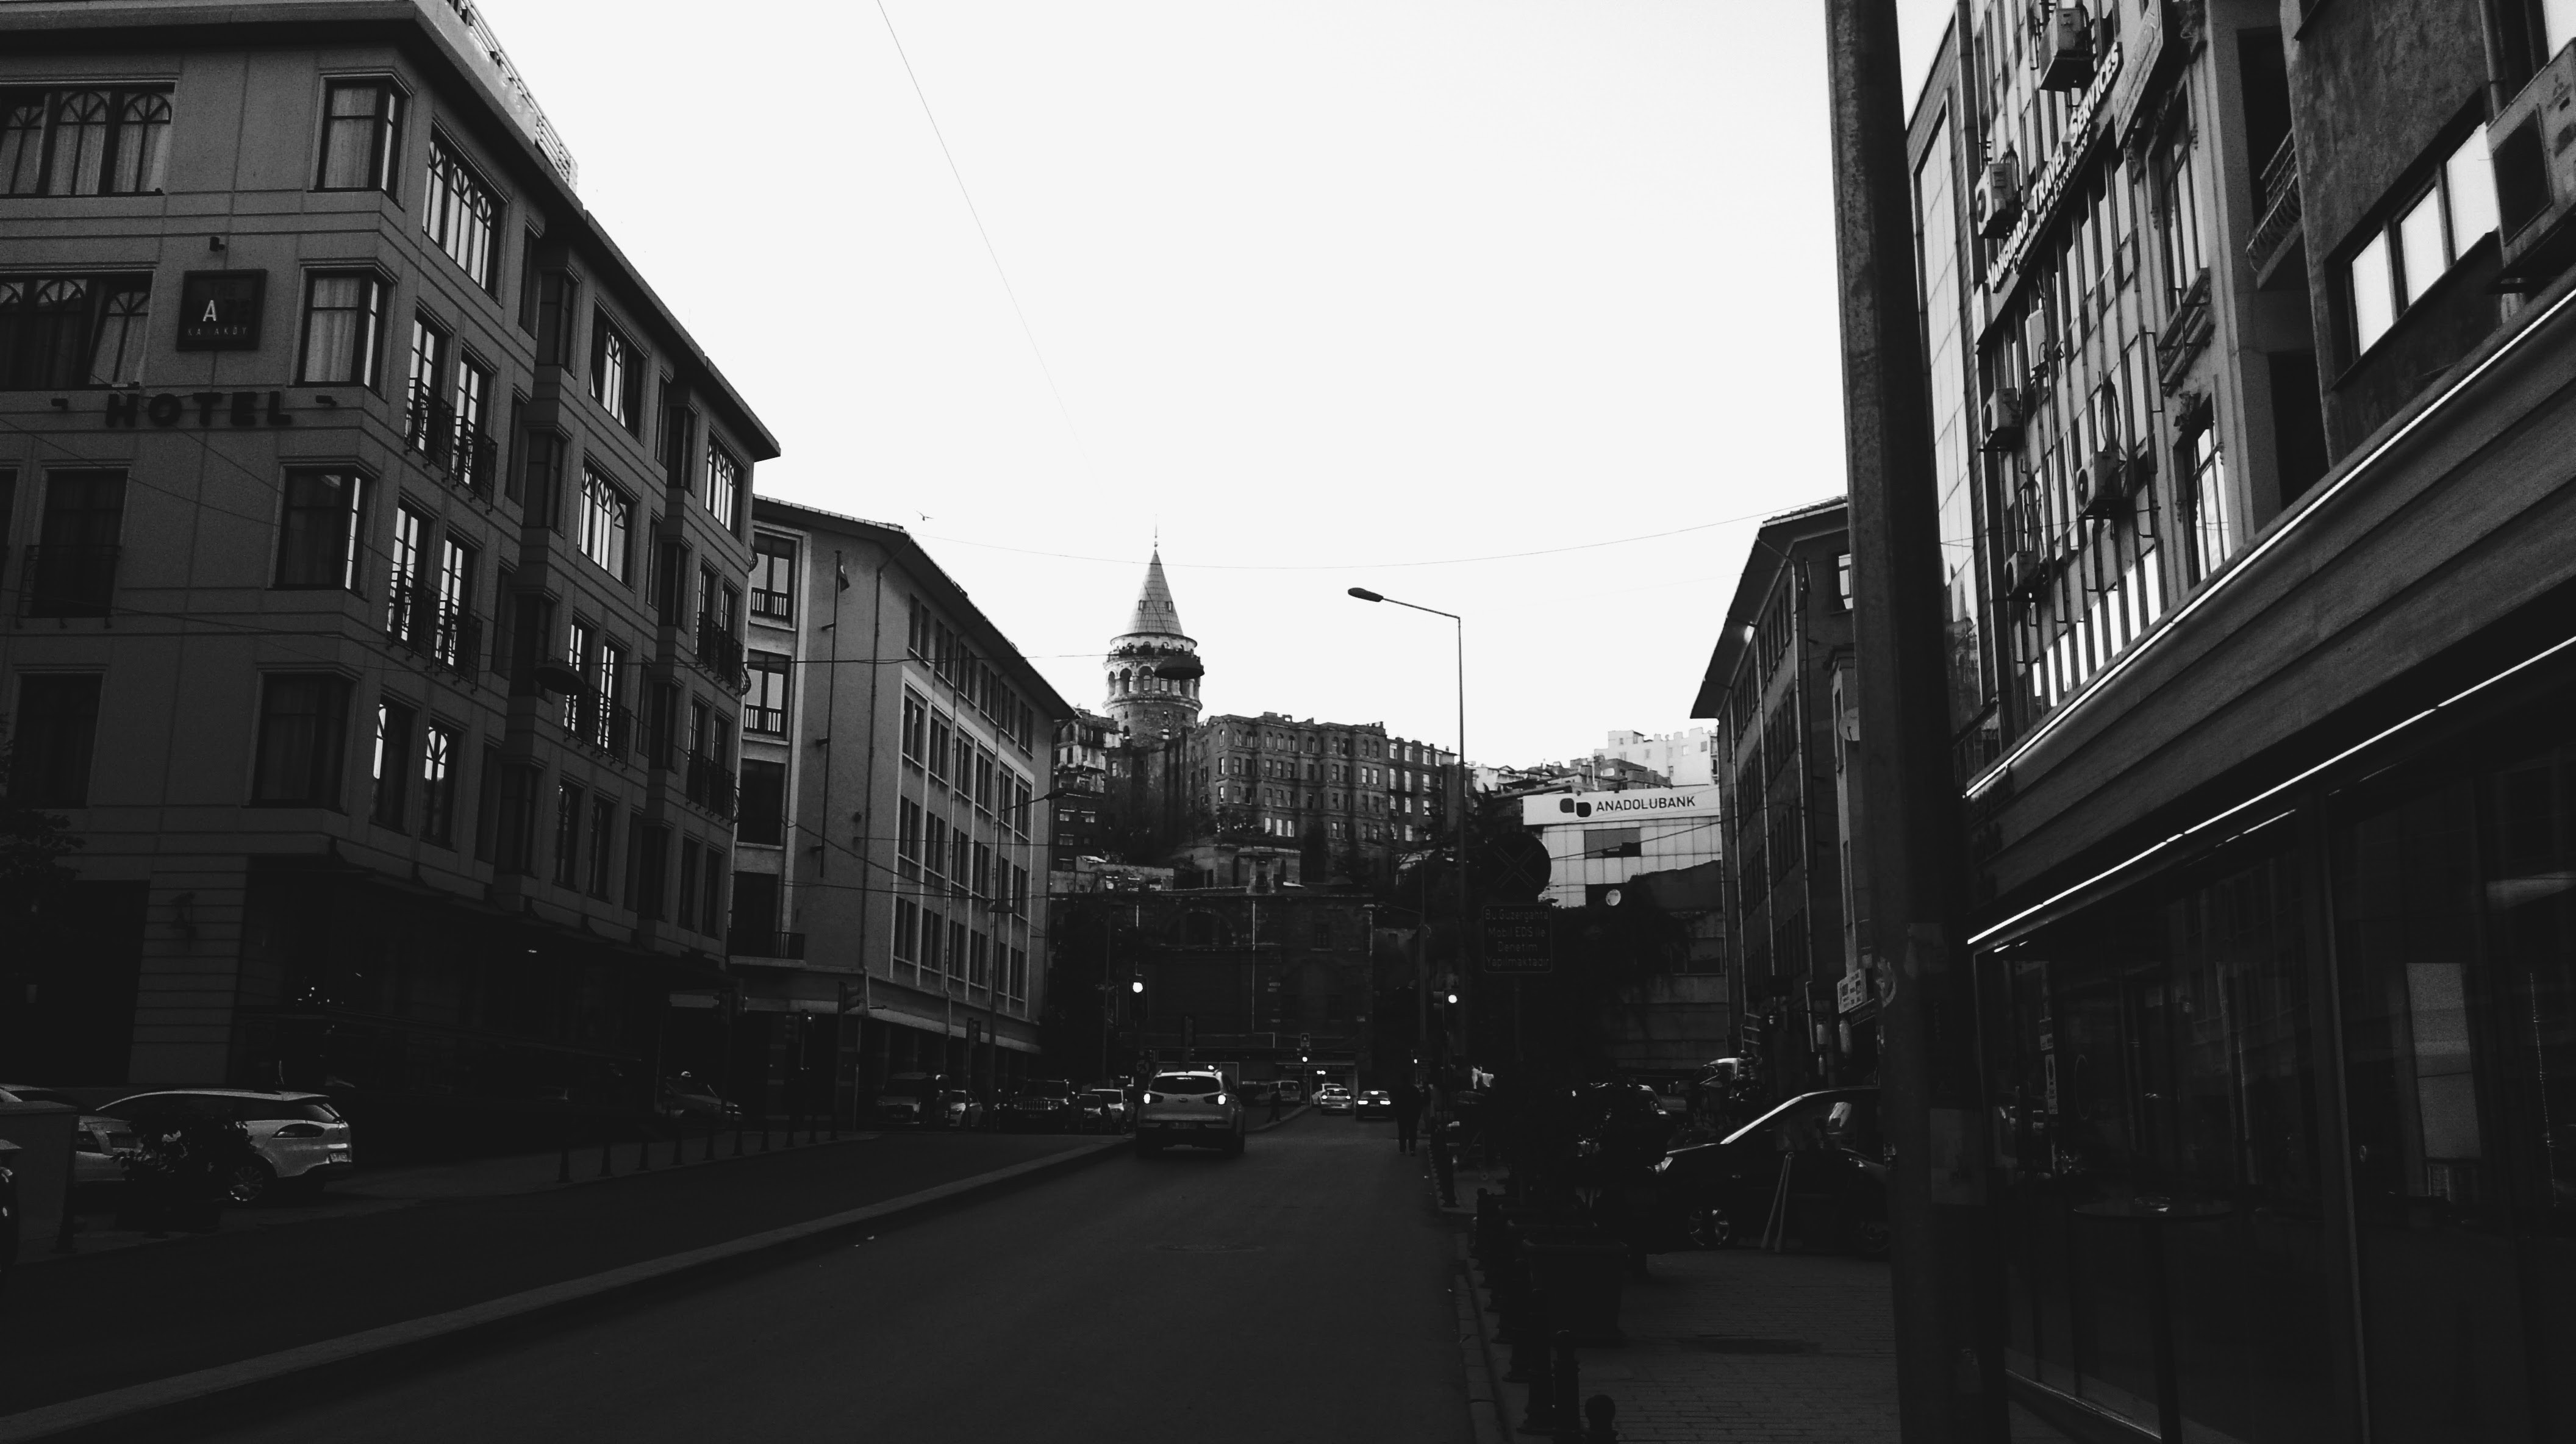 General 4224x2368 Istanbul Galata Tower monochrome city urban street